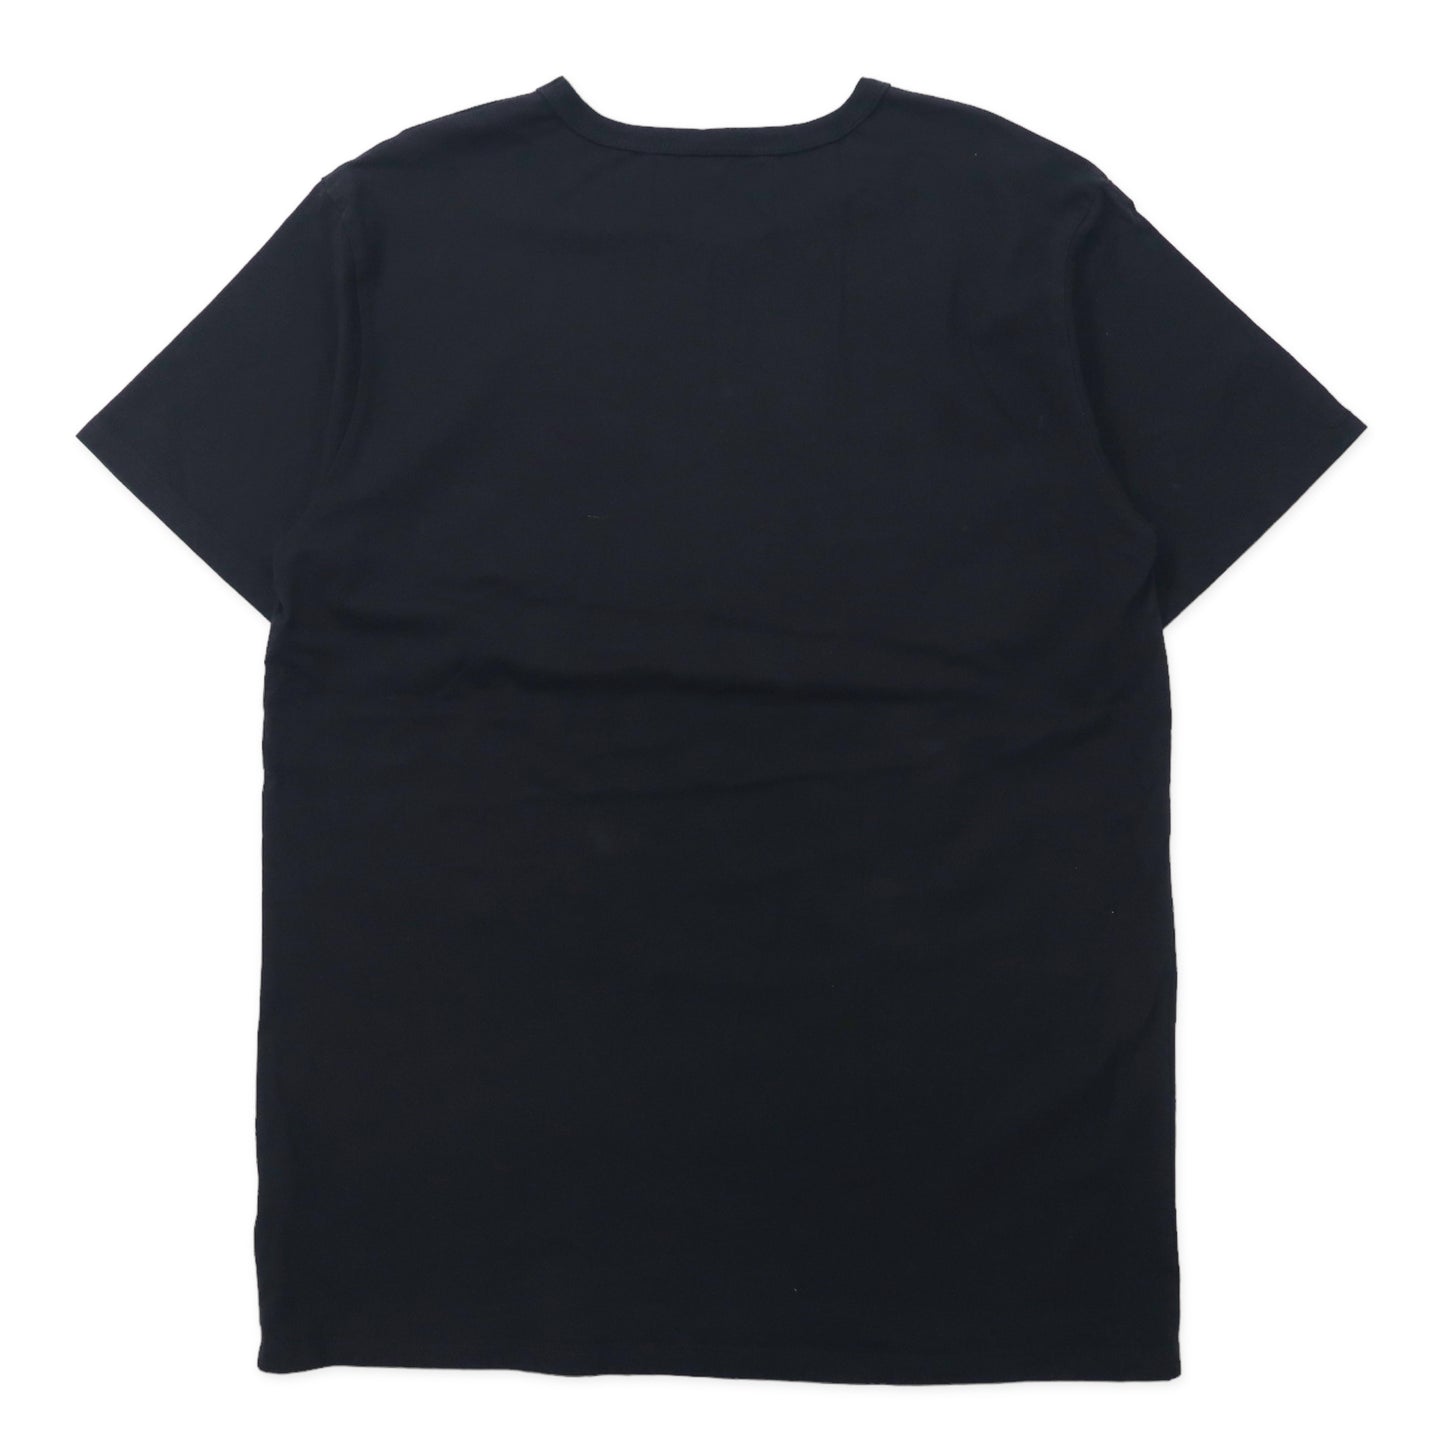 BIANCA CHANDON Tシャツ XL ブラック コットン HOMME FEMME T-SHIRT ロサンゼルス製 未使用品